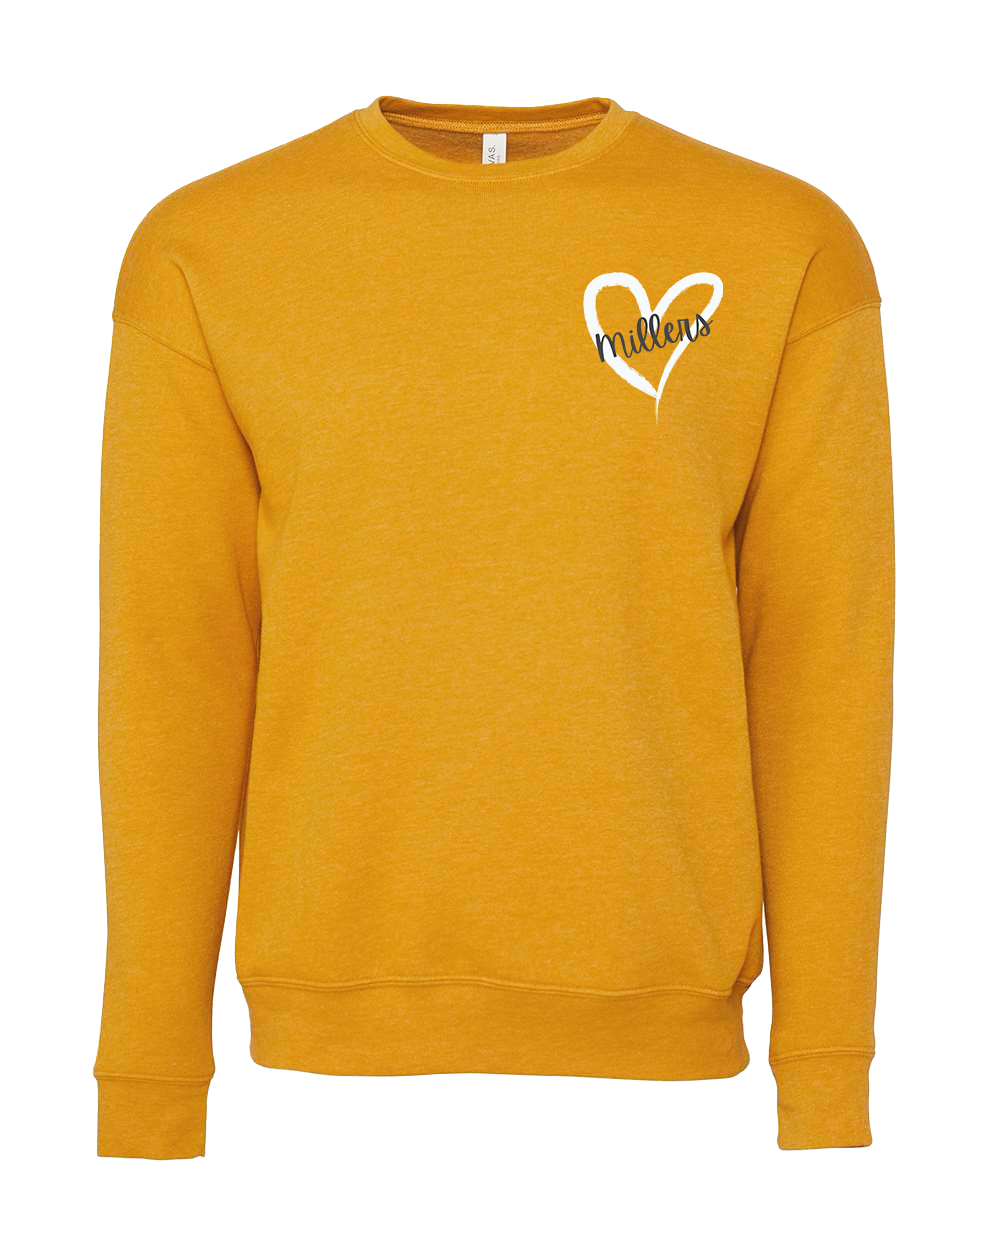 Noblesville Millers Heart Crew Sweatshirt - Heather Mustard